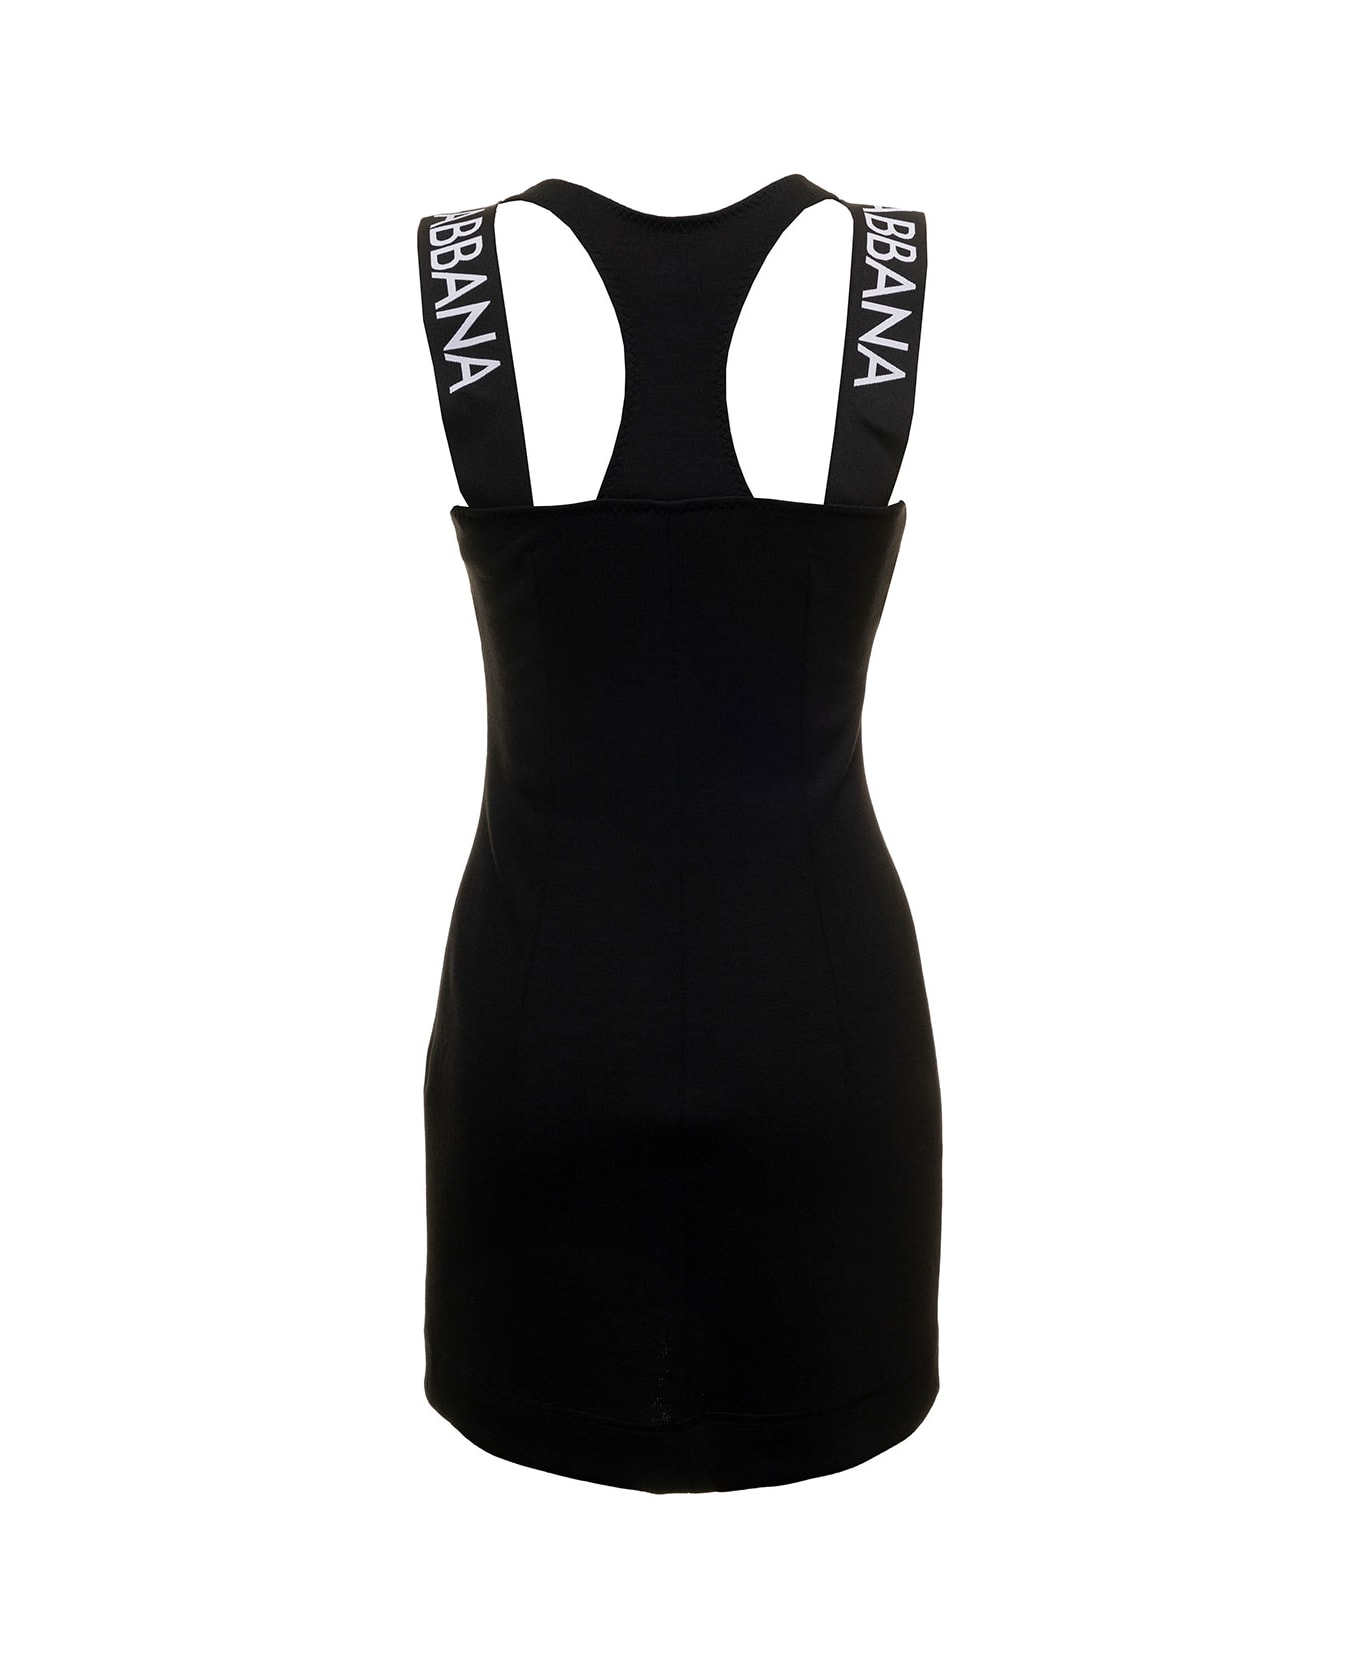 Dolce & Gabbana Black Sheath Dress In Stretch Fabric With Logoed Jacquard Shoulder Straps Dolce & Gabbana Woman - Black